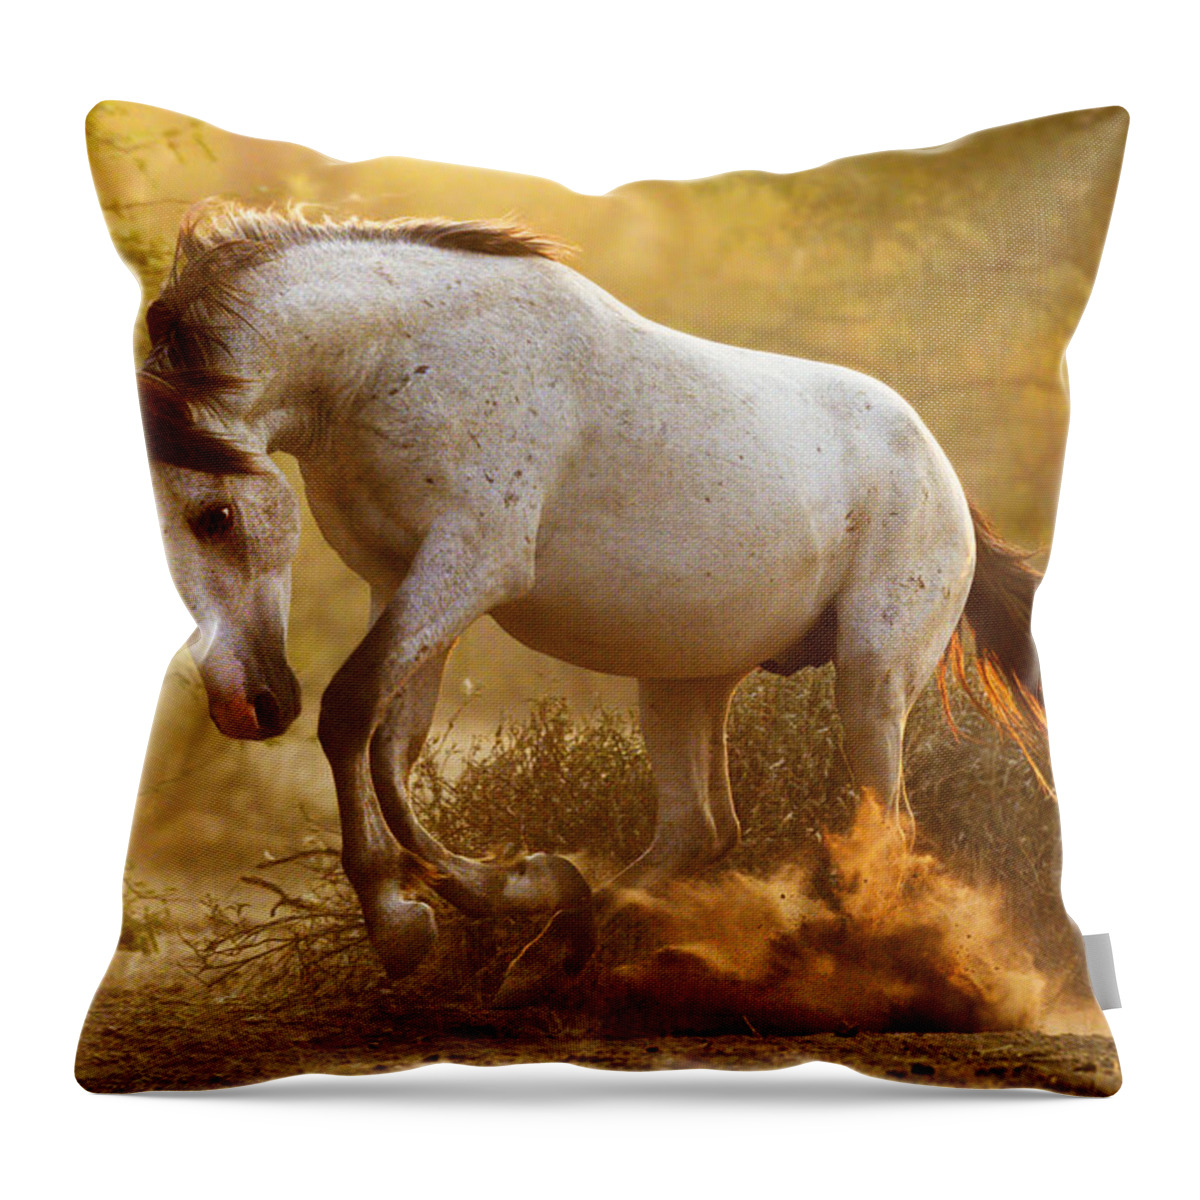 Stallion Throw Pillow featuring the photograph Striking Stallion. by Paul Martin